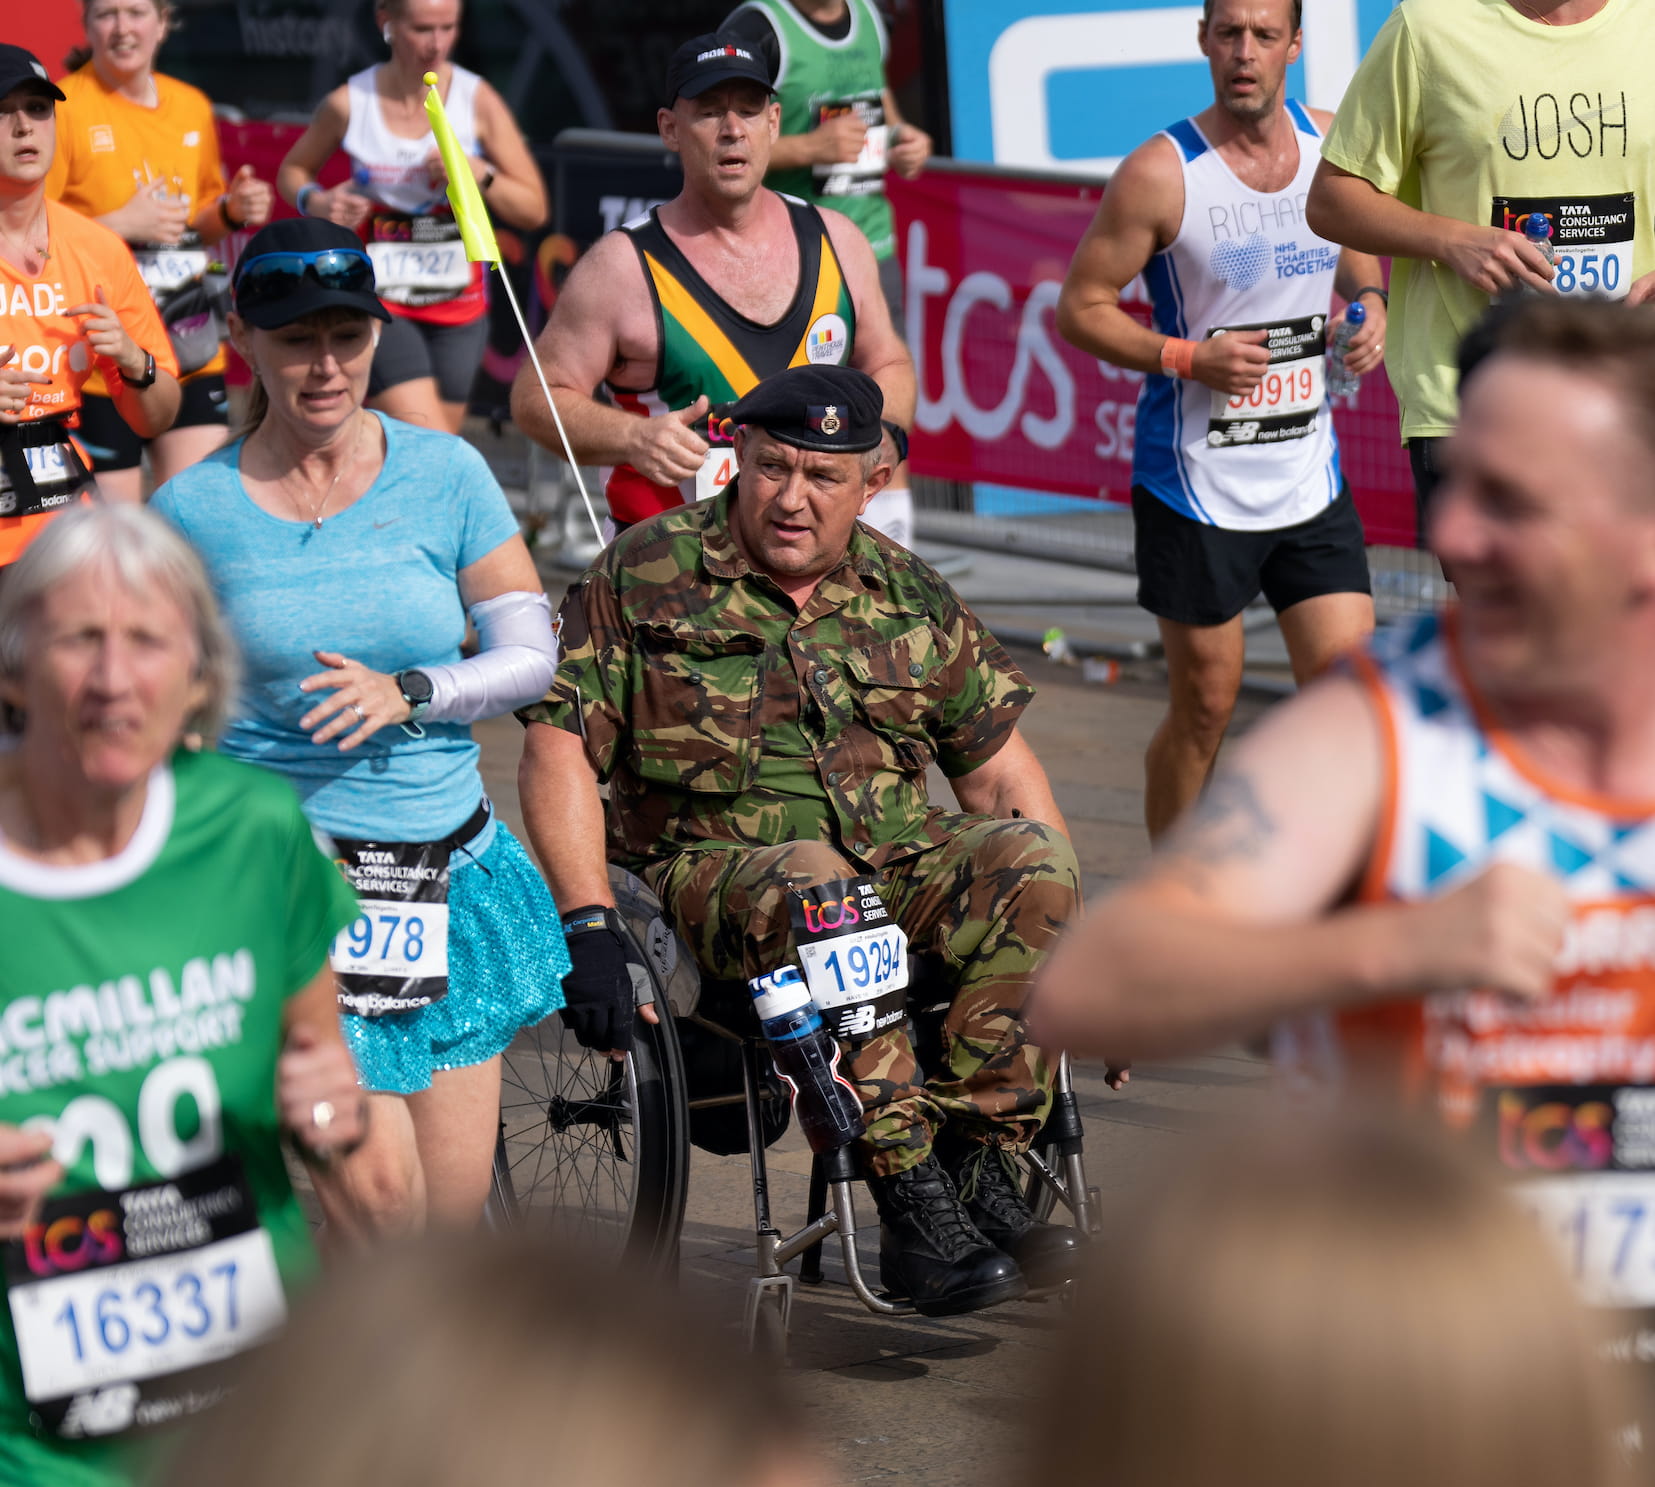 A wheelchair TCS London Marathon participant wearing military uniform